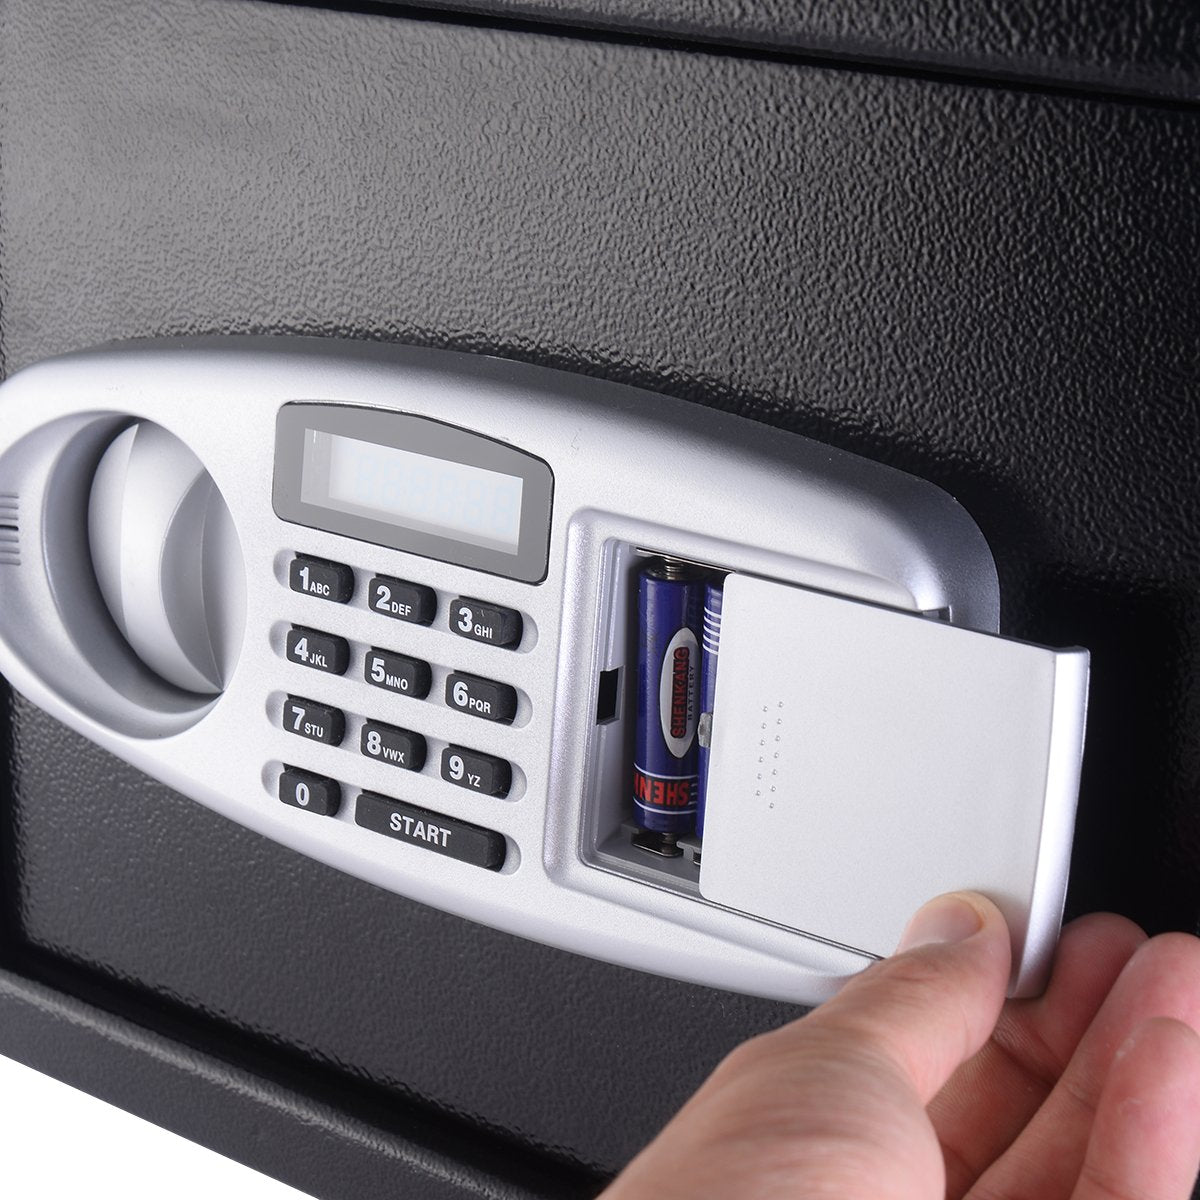 Giantex Digital Safe Box, Cash Vault Lock Home Jewelry